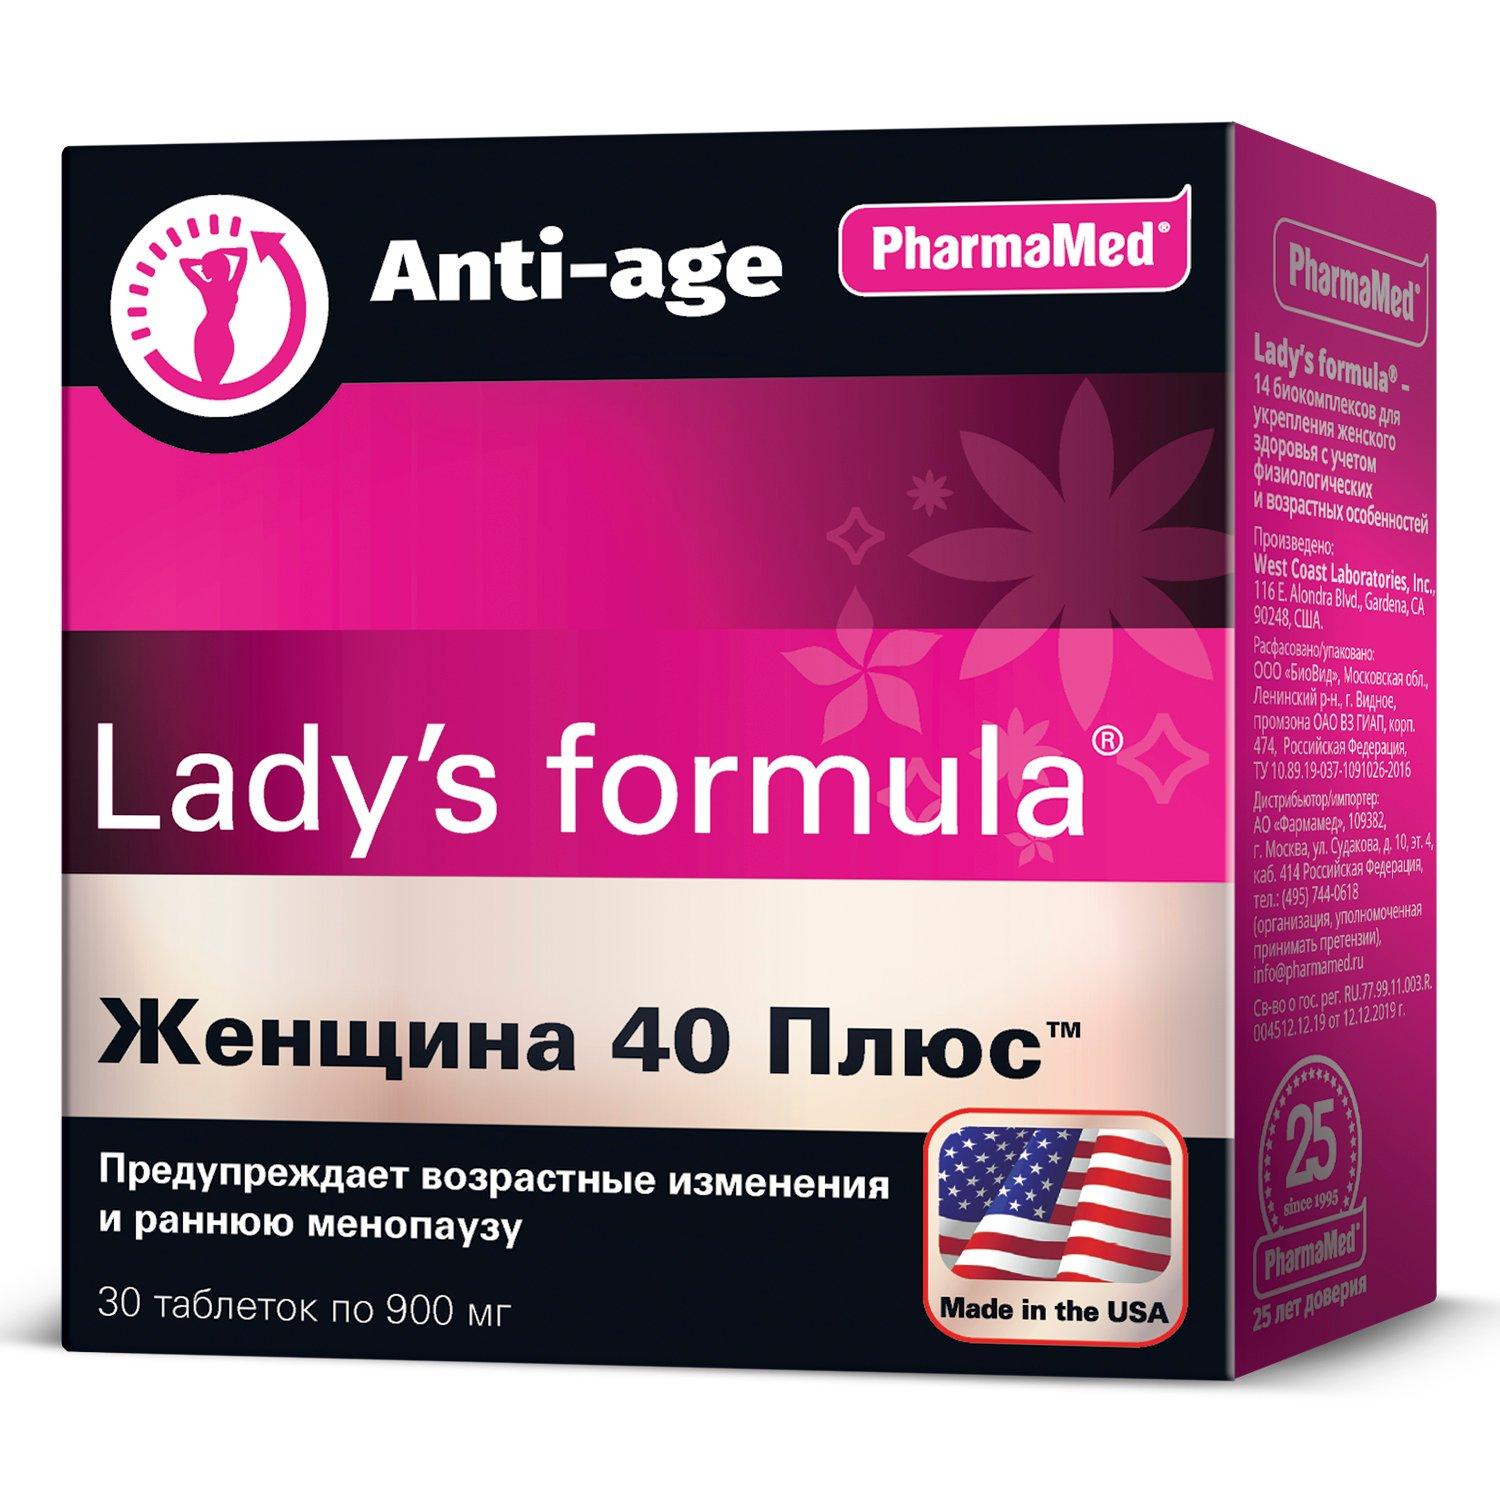 Lady's formula Женщина 40 Плюс